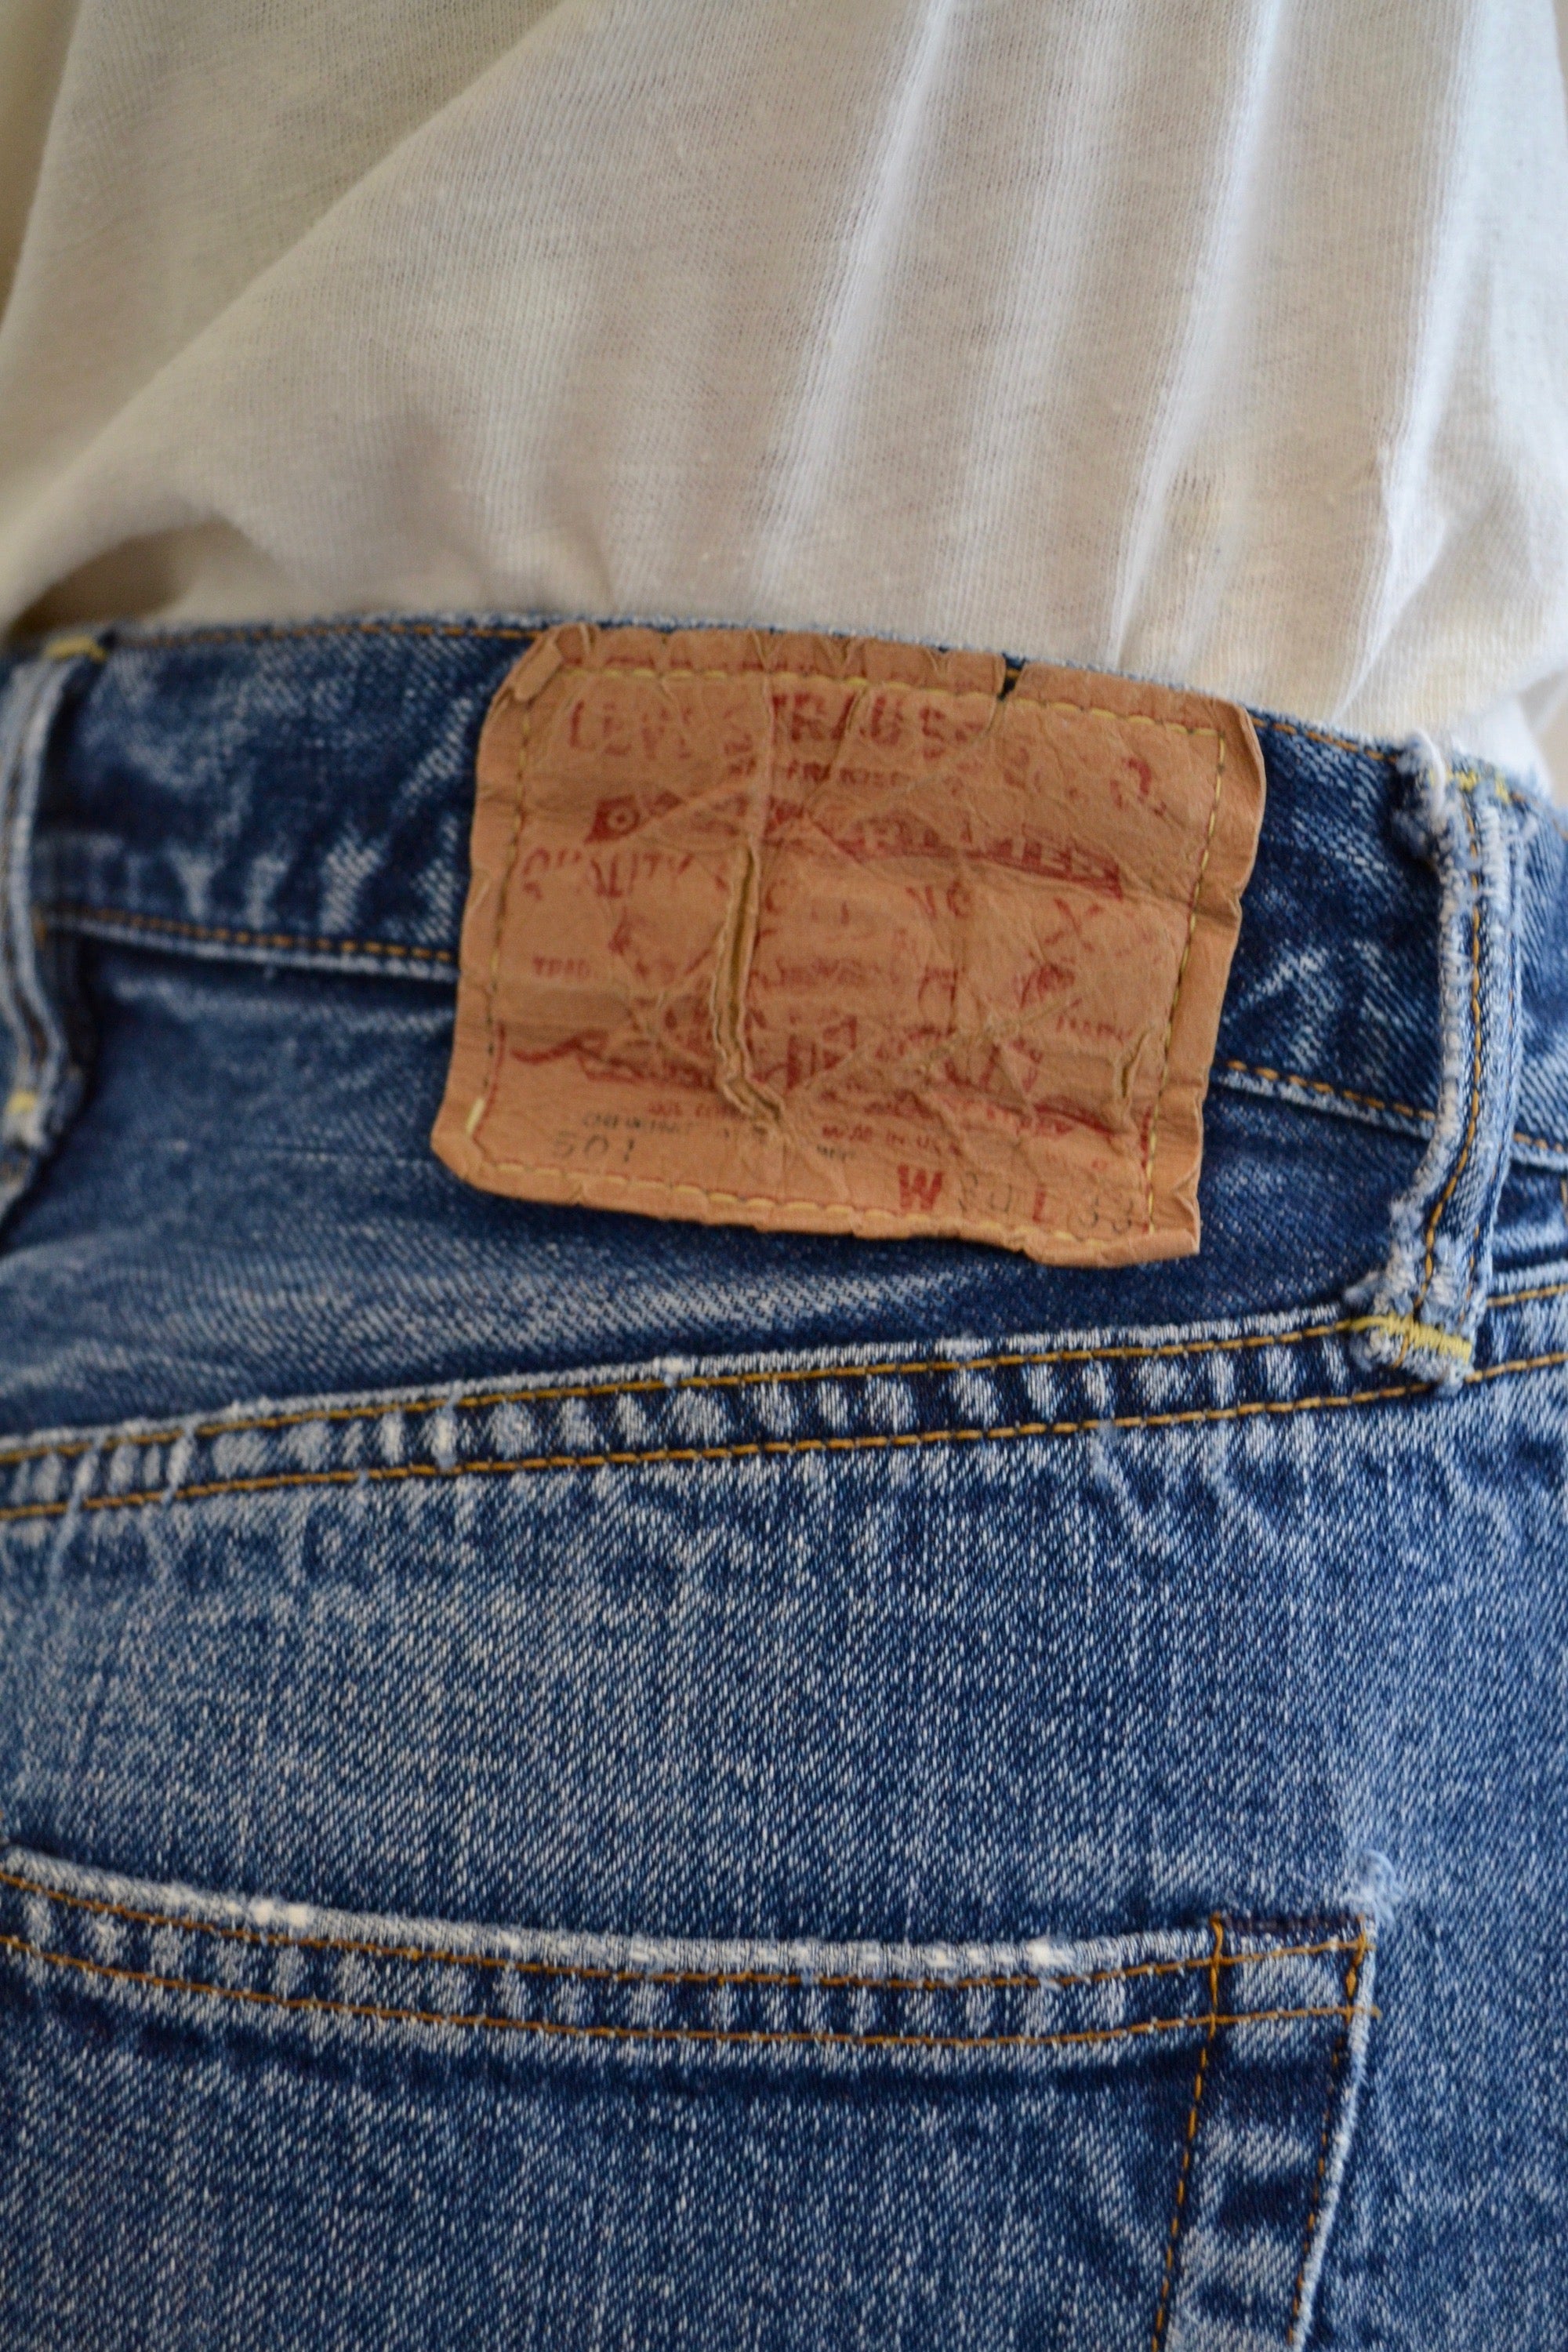 Vintage Patched Levis Selvedge Jeans